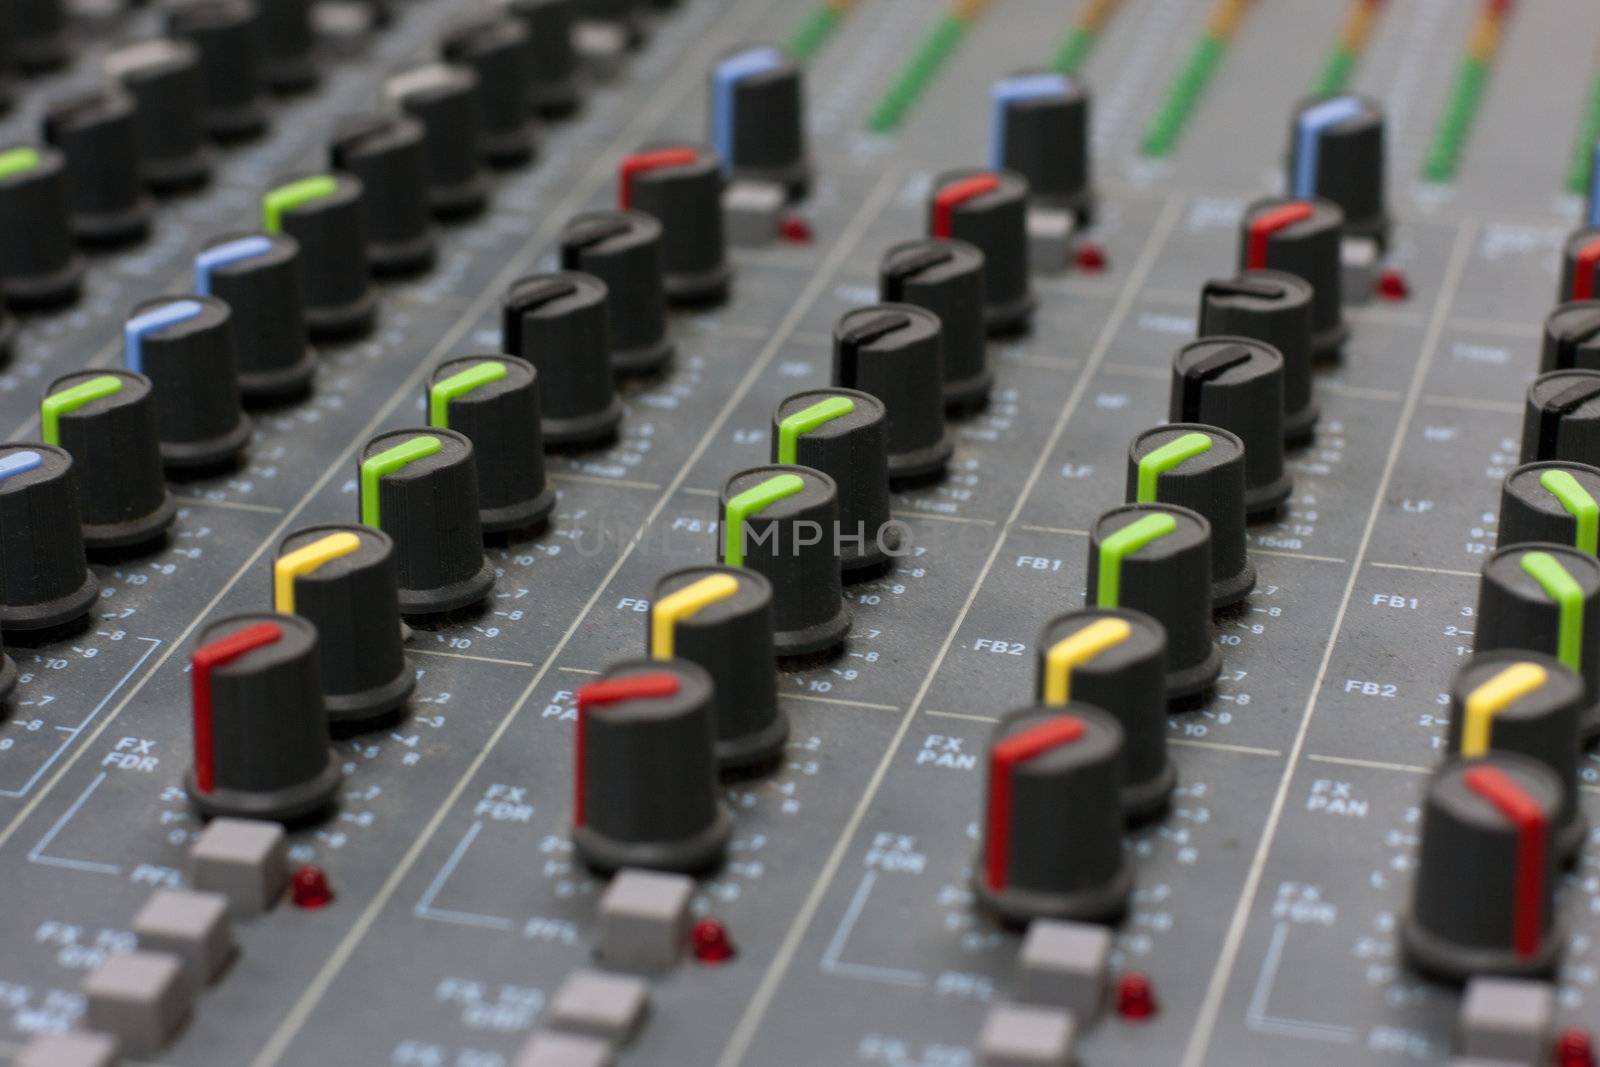 Audio mixing board console by GunterNezhoda